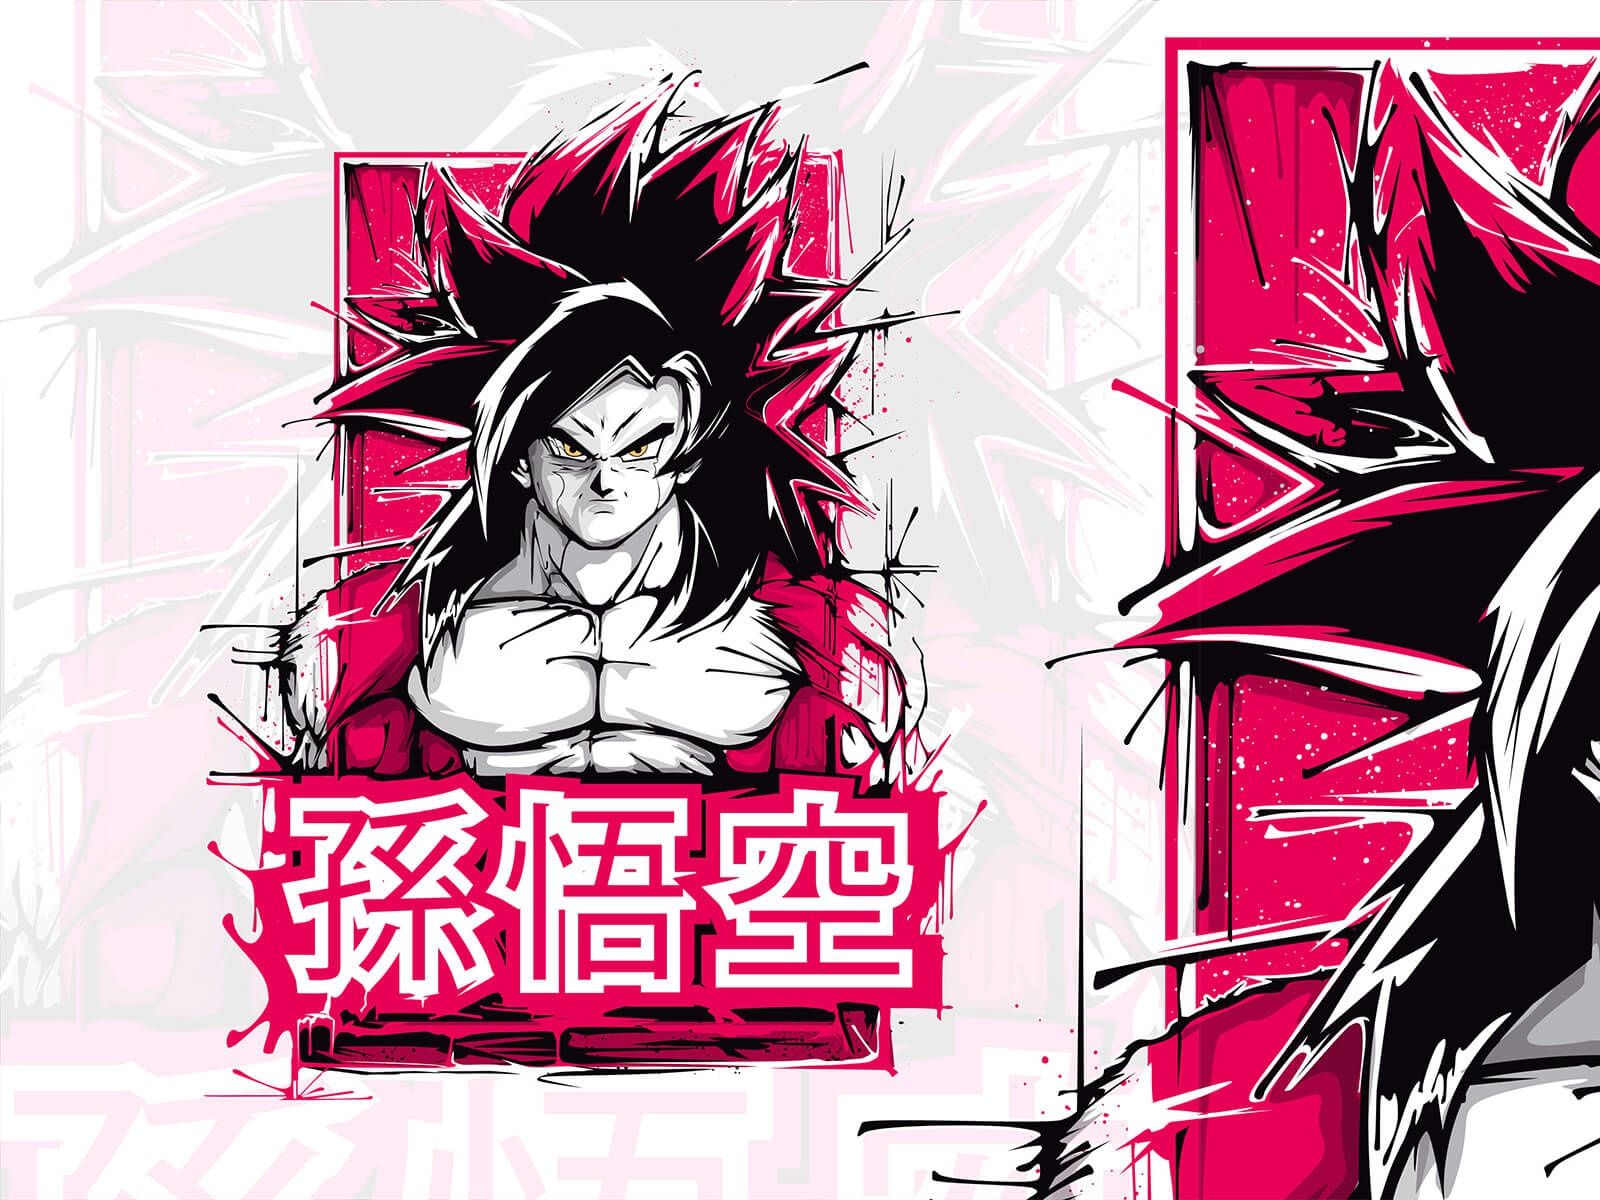 Super Saiyan 4 Goku Vector Drip Illustration. Dragon ball wallpaper, Super saiyan 4 goku, Goku